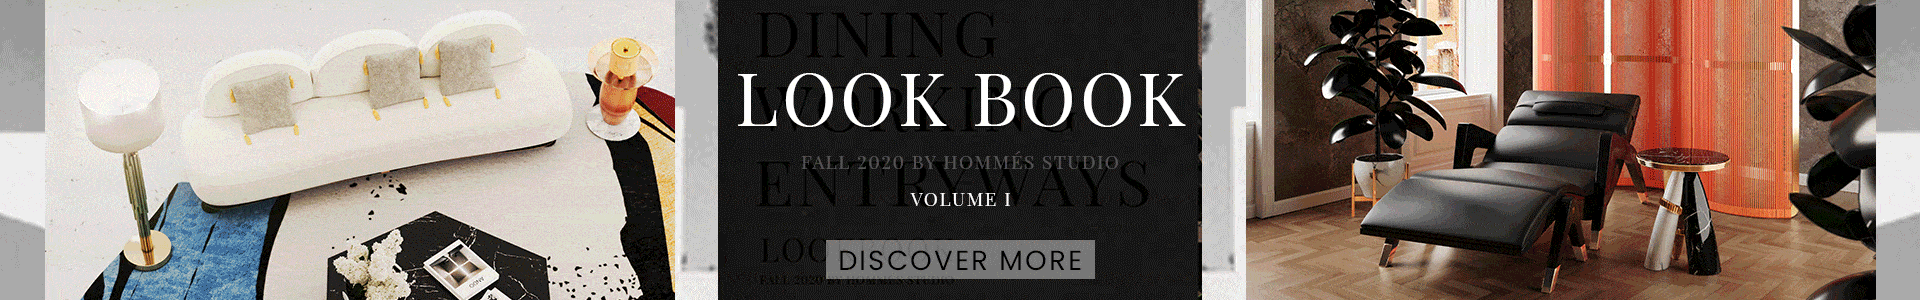 lookbook fall 2020 hommes studio